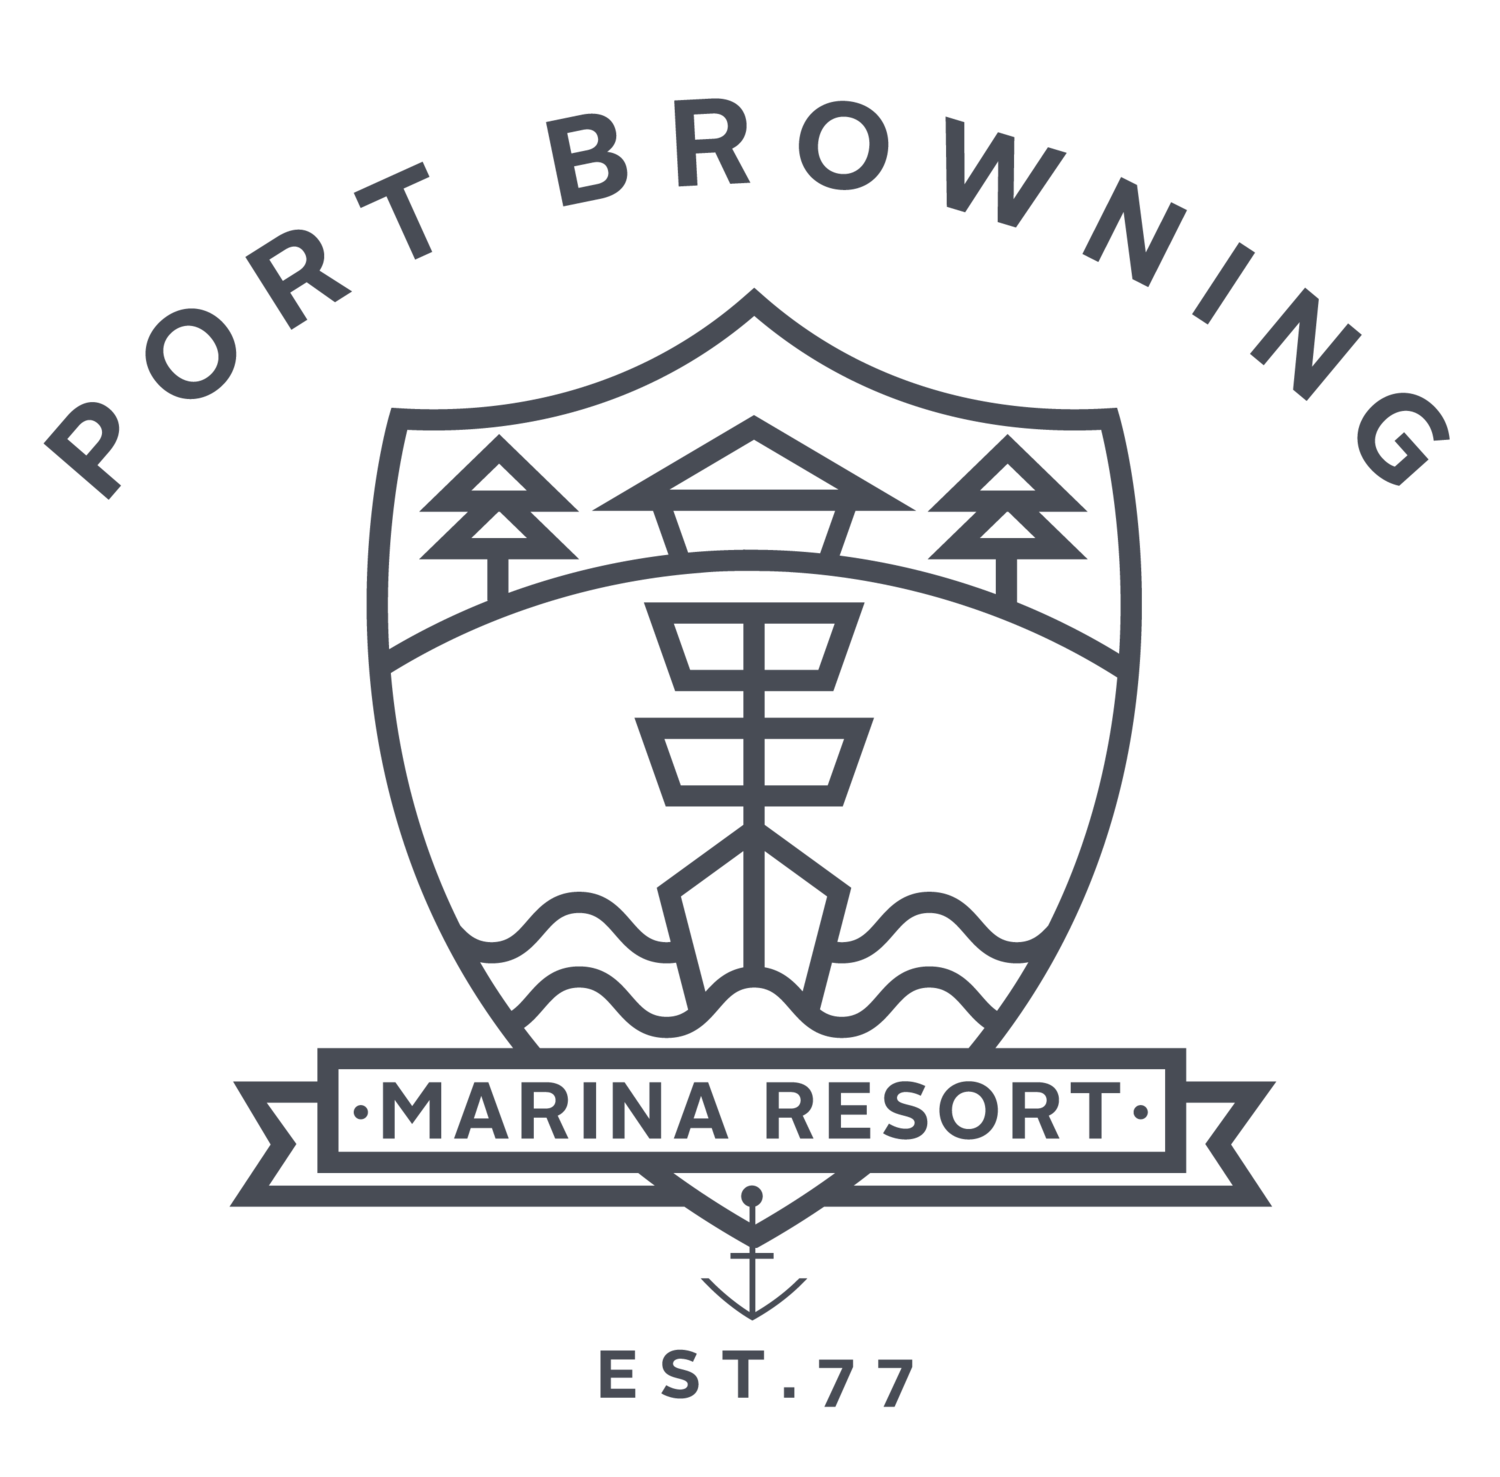 Port Browning Marina